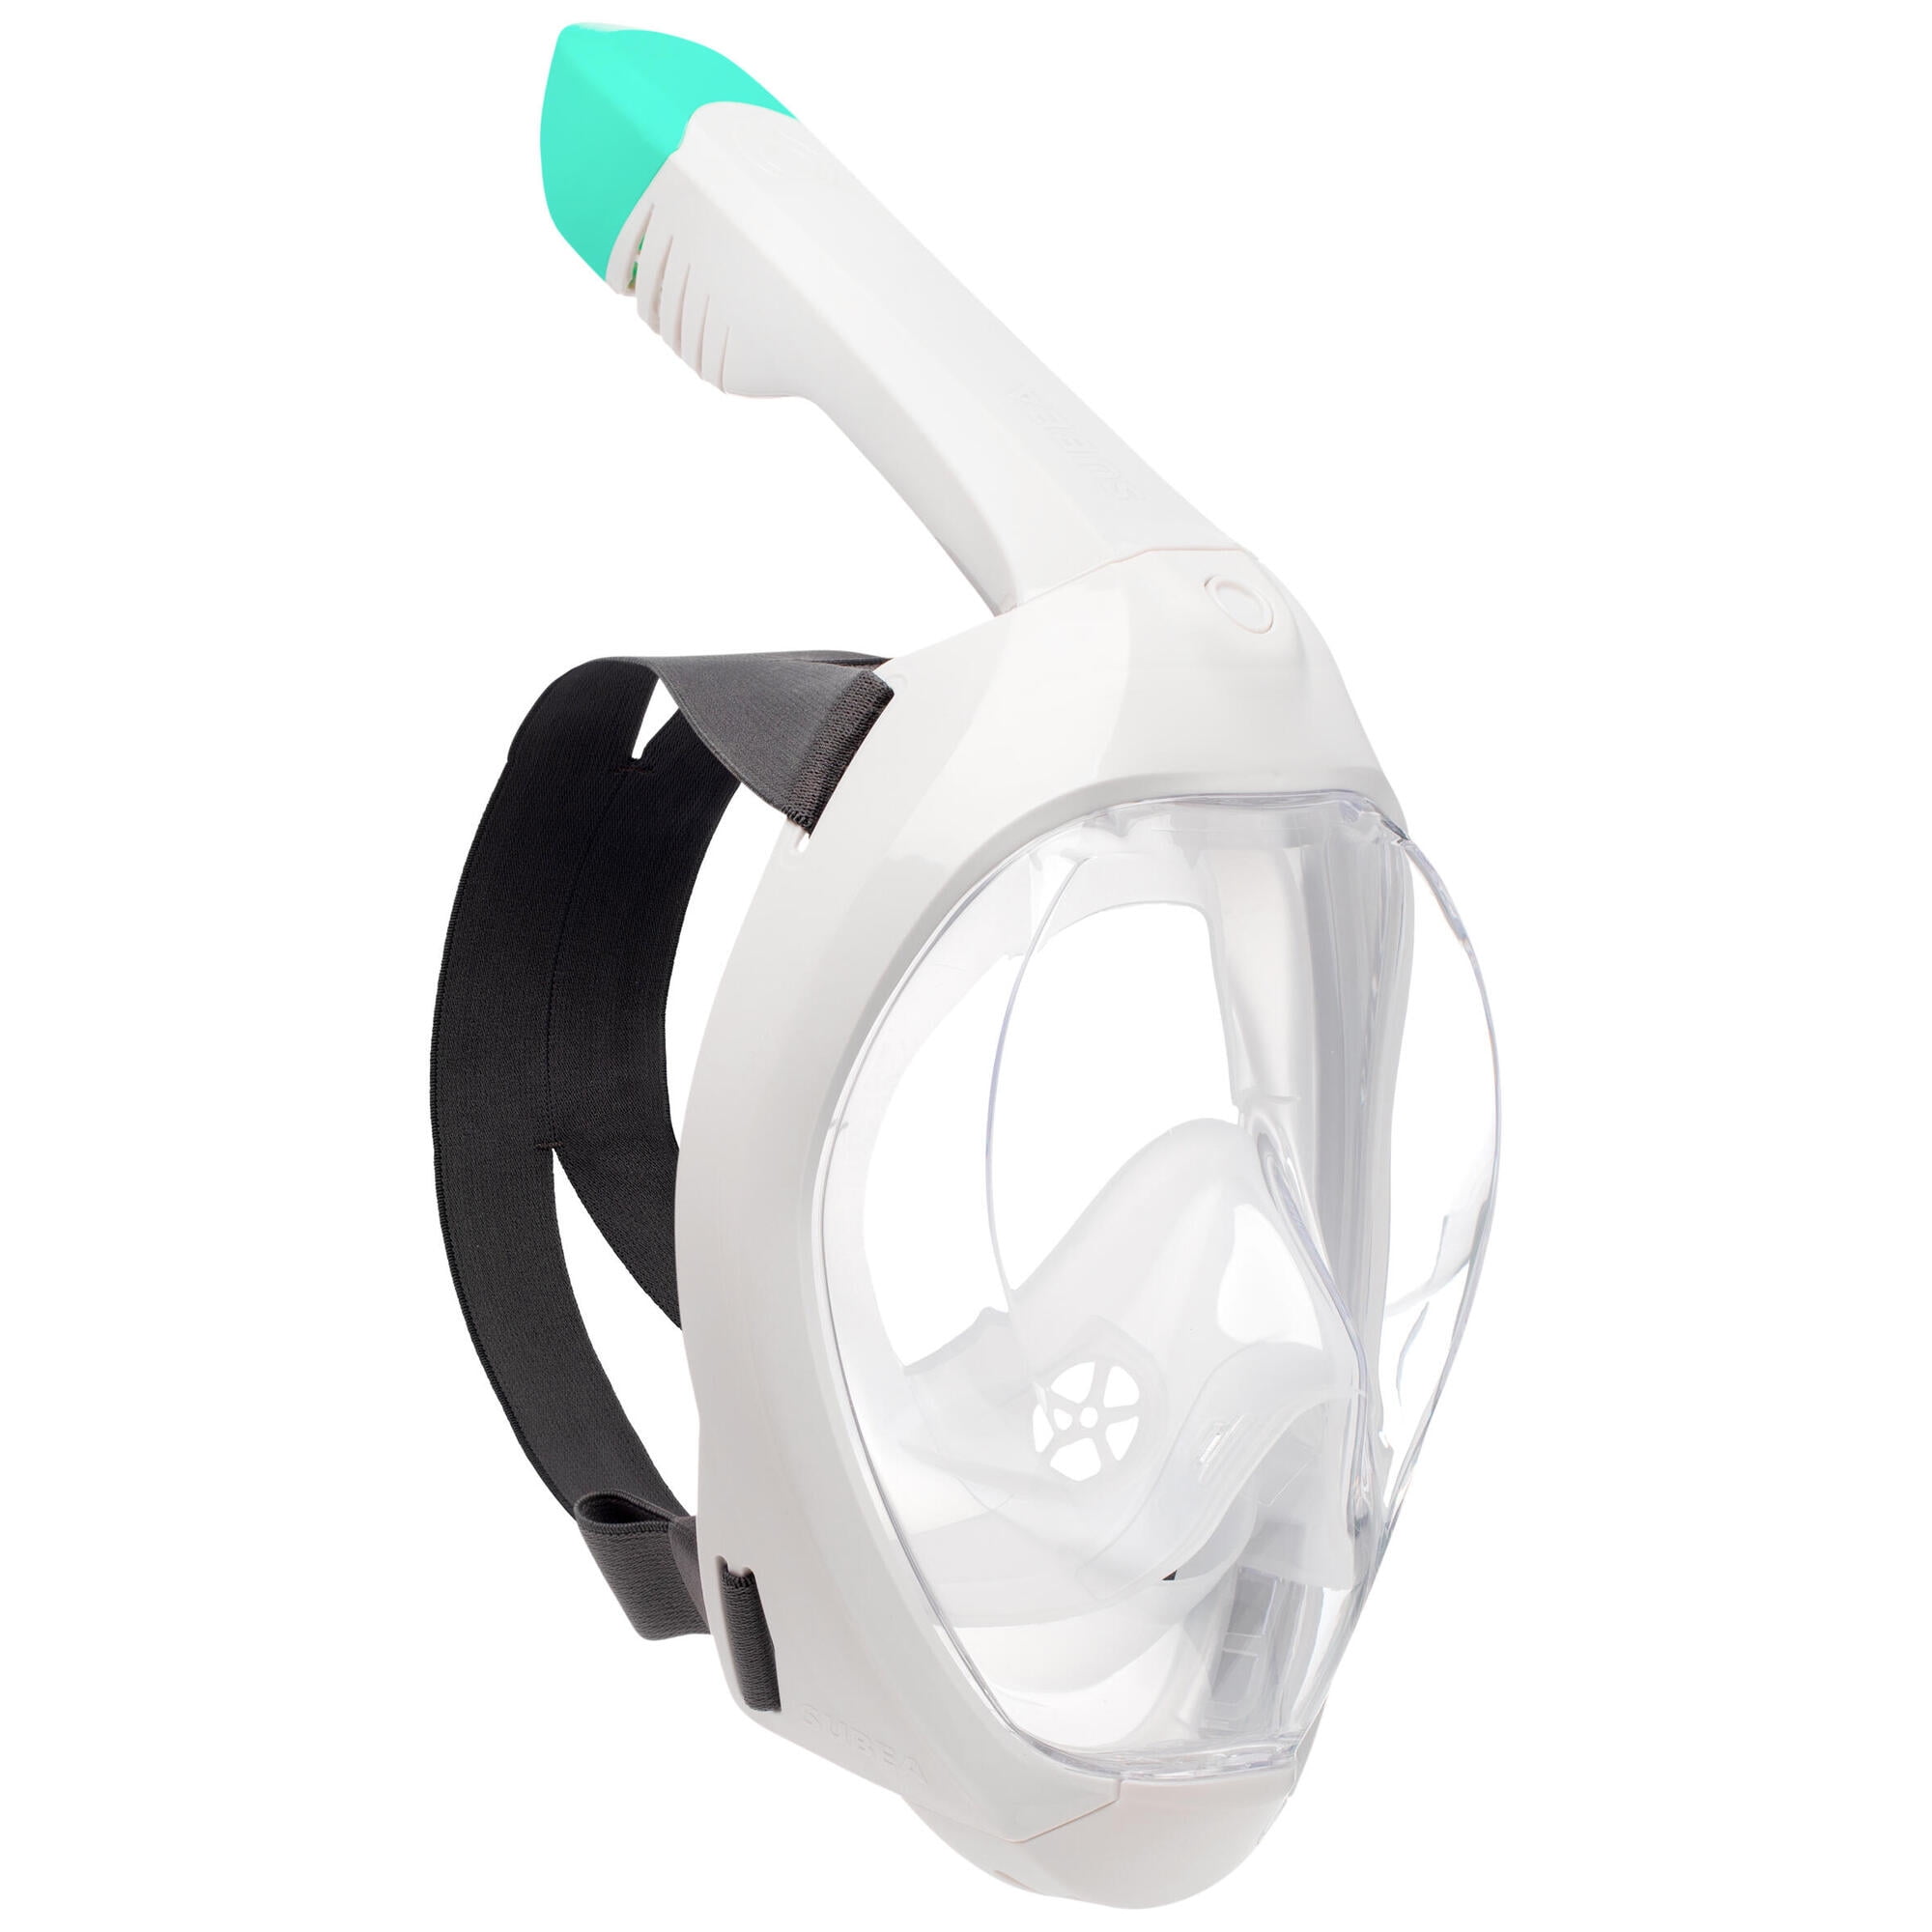 Decathlon Subea Adult & Teen Easybreath 500 Full Face Surface Snorkeling Mask Walmart.com